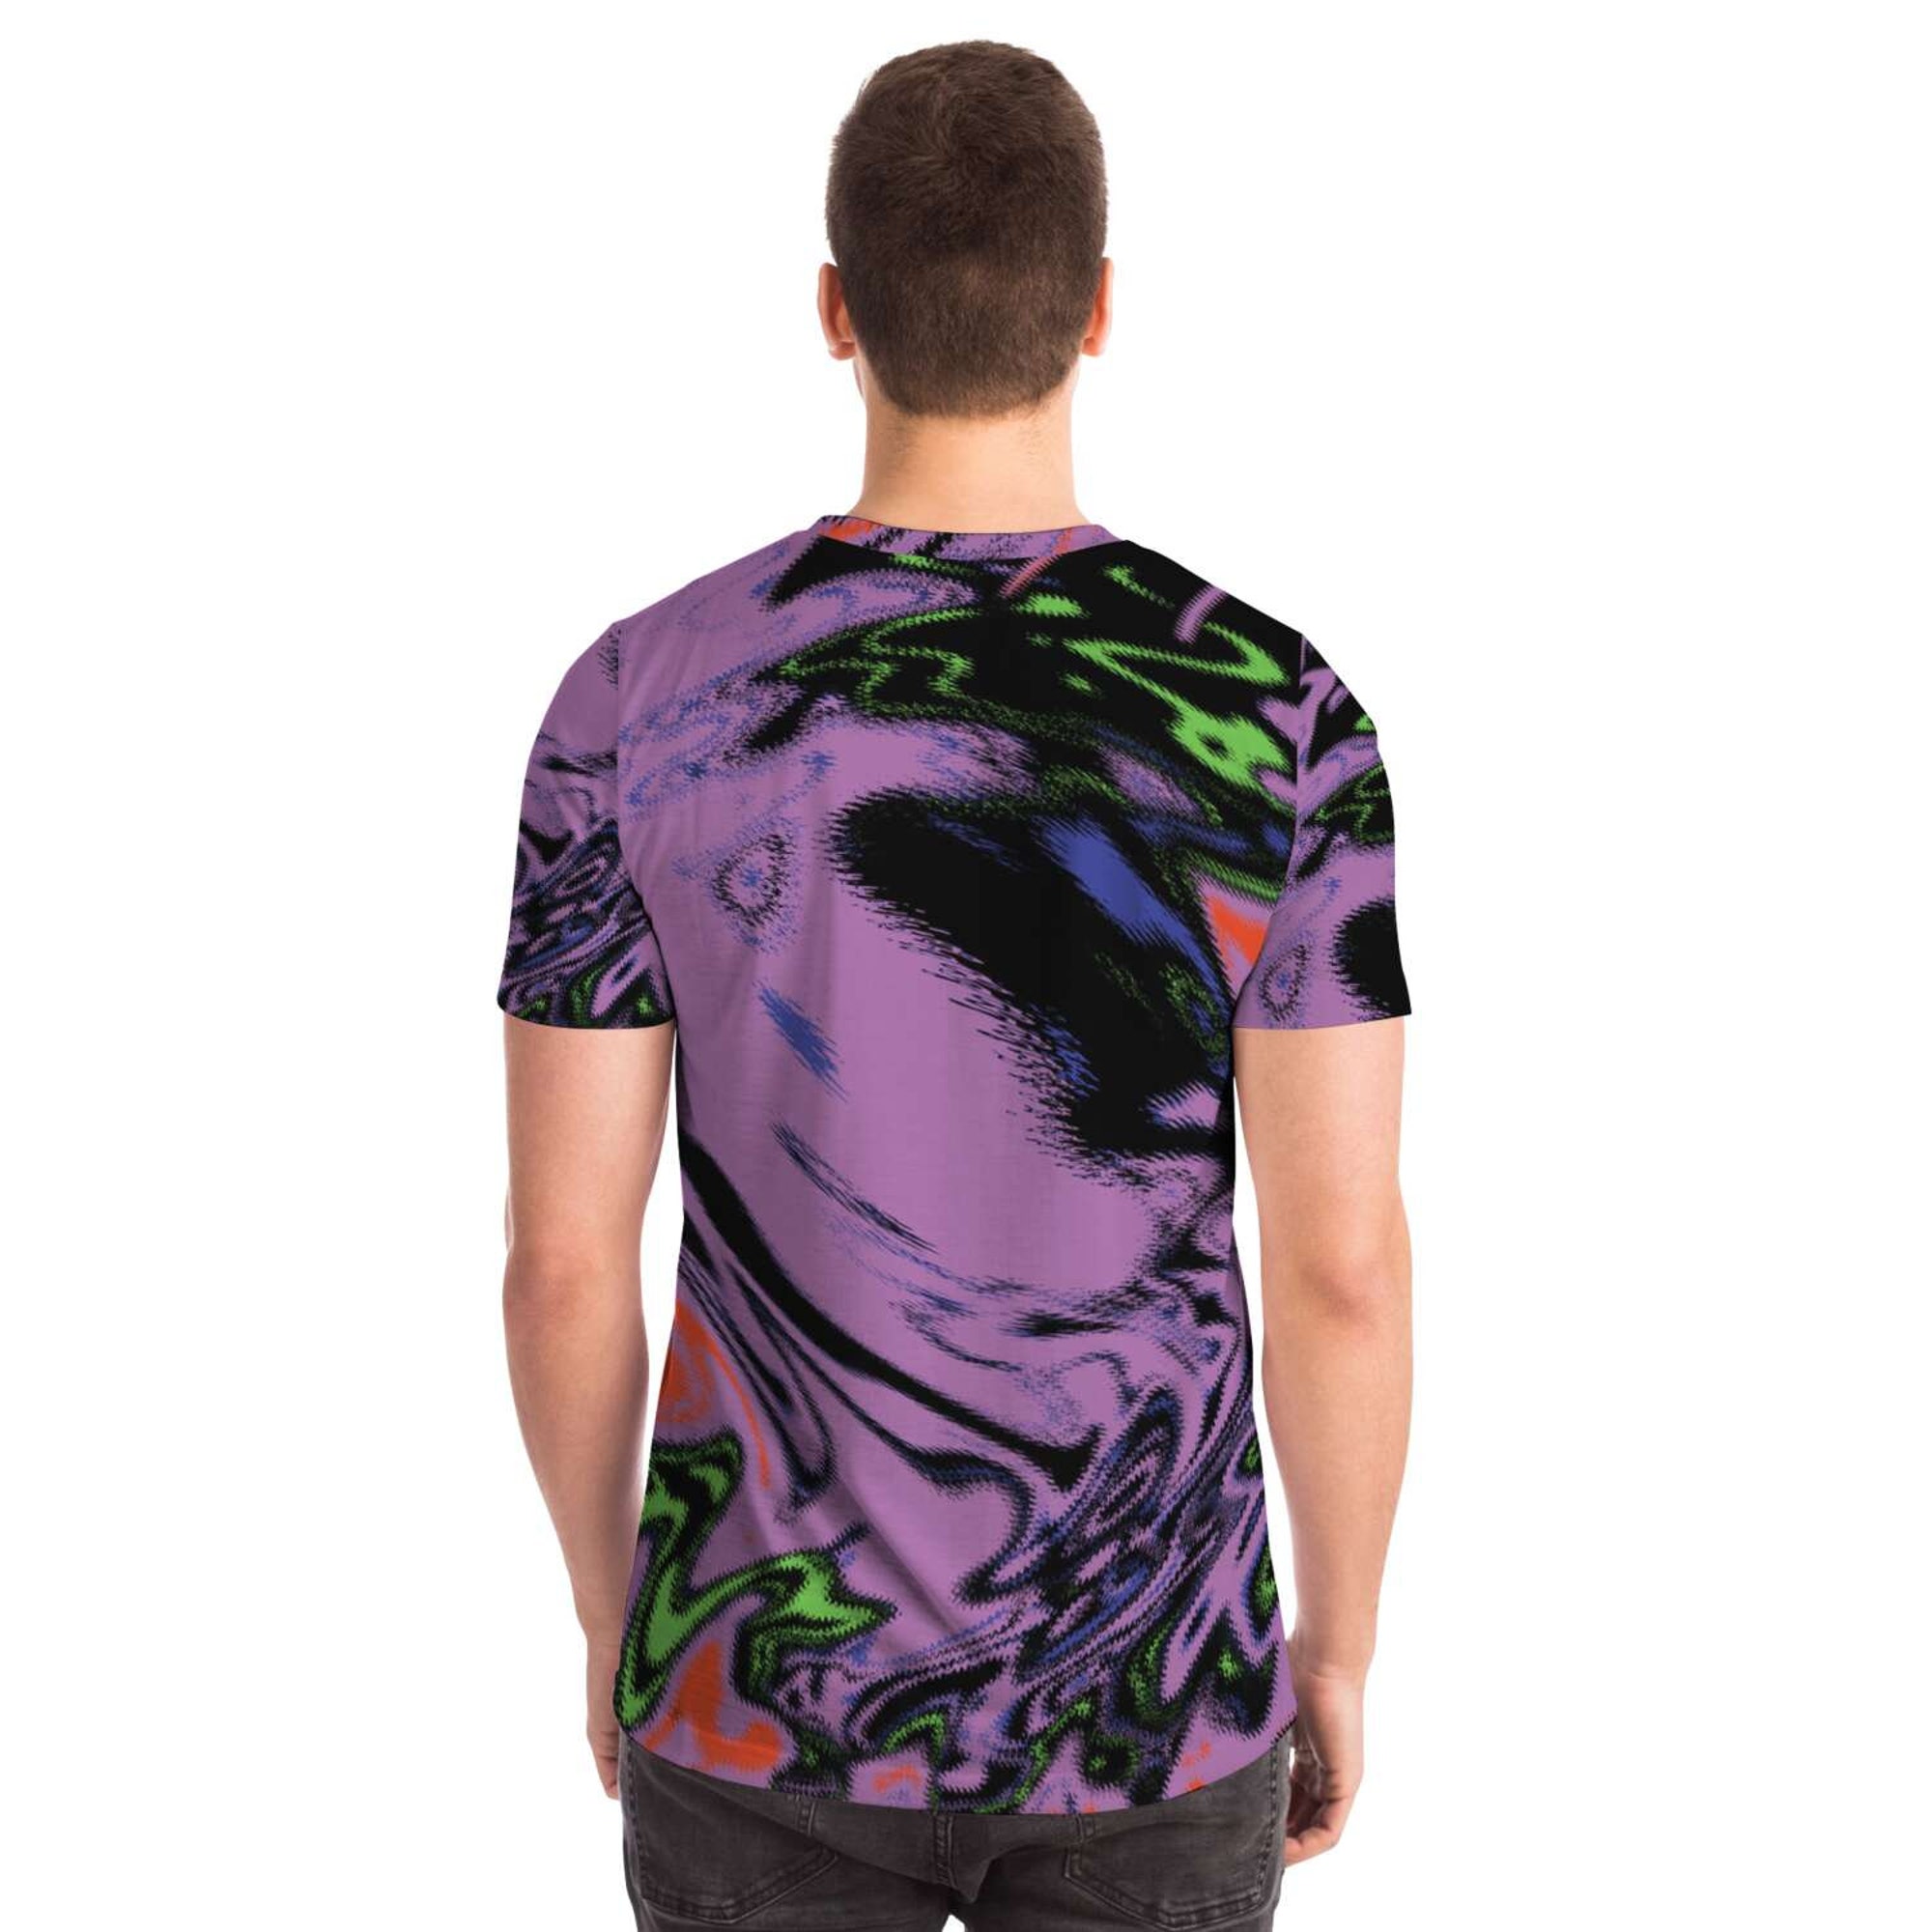 Retro Hipster Beats Uranium Tint Psychedelic Glitch Pop Electric Digital Art Music 3D T Shirt